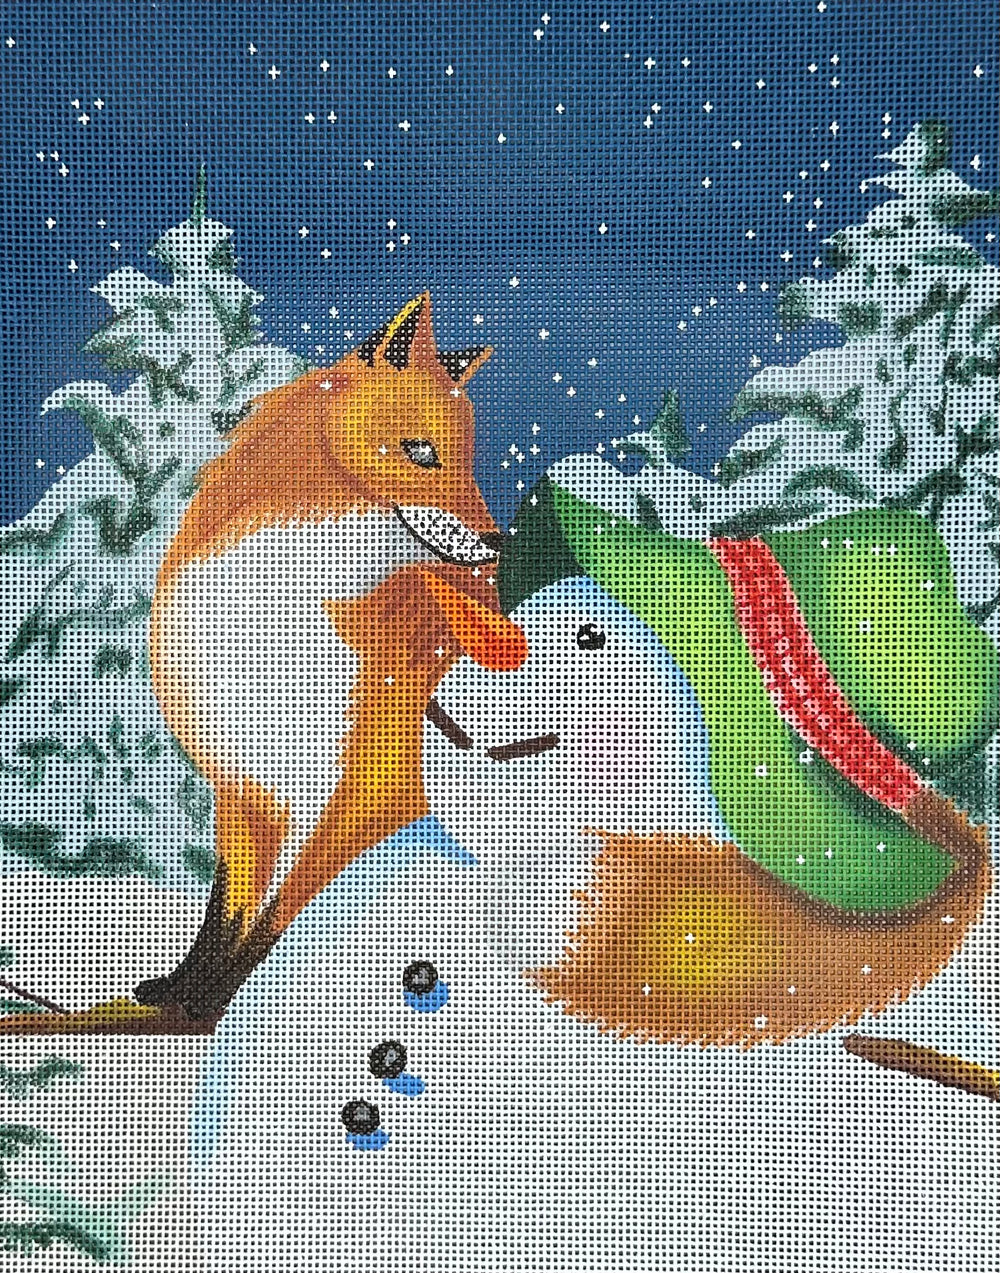 Snowman with Fox